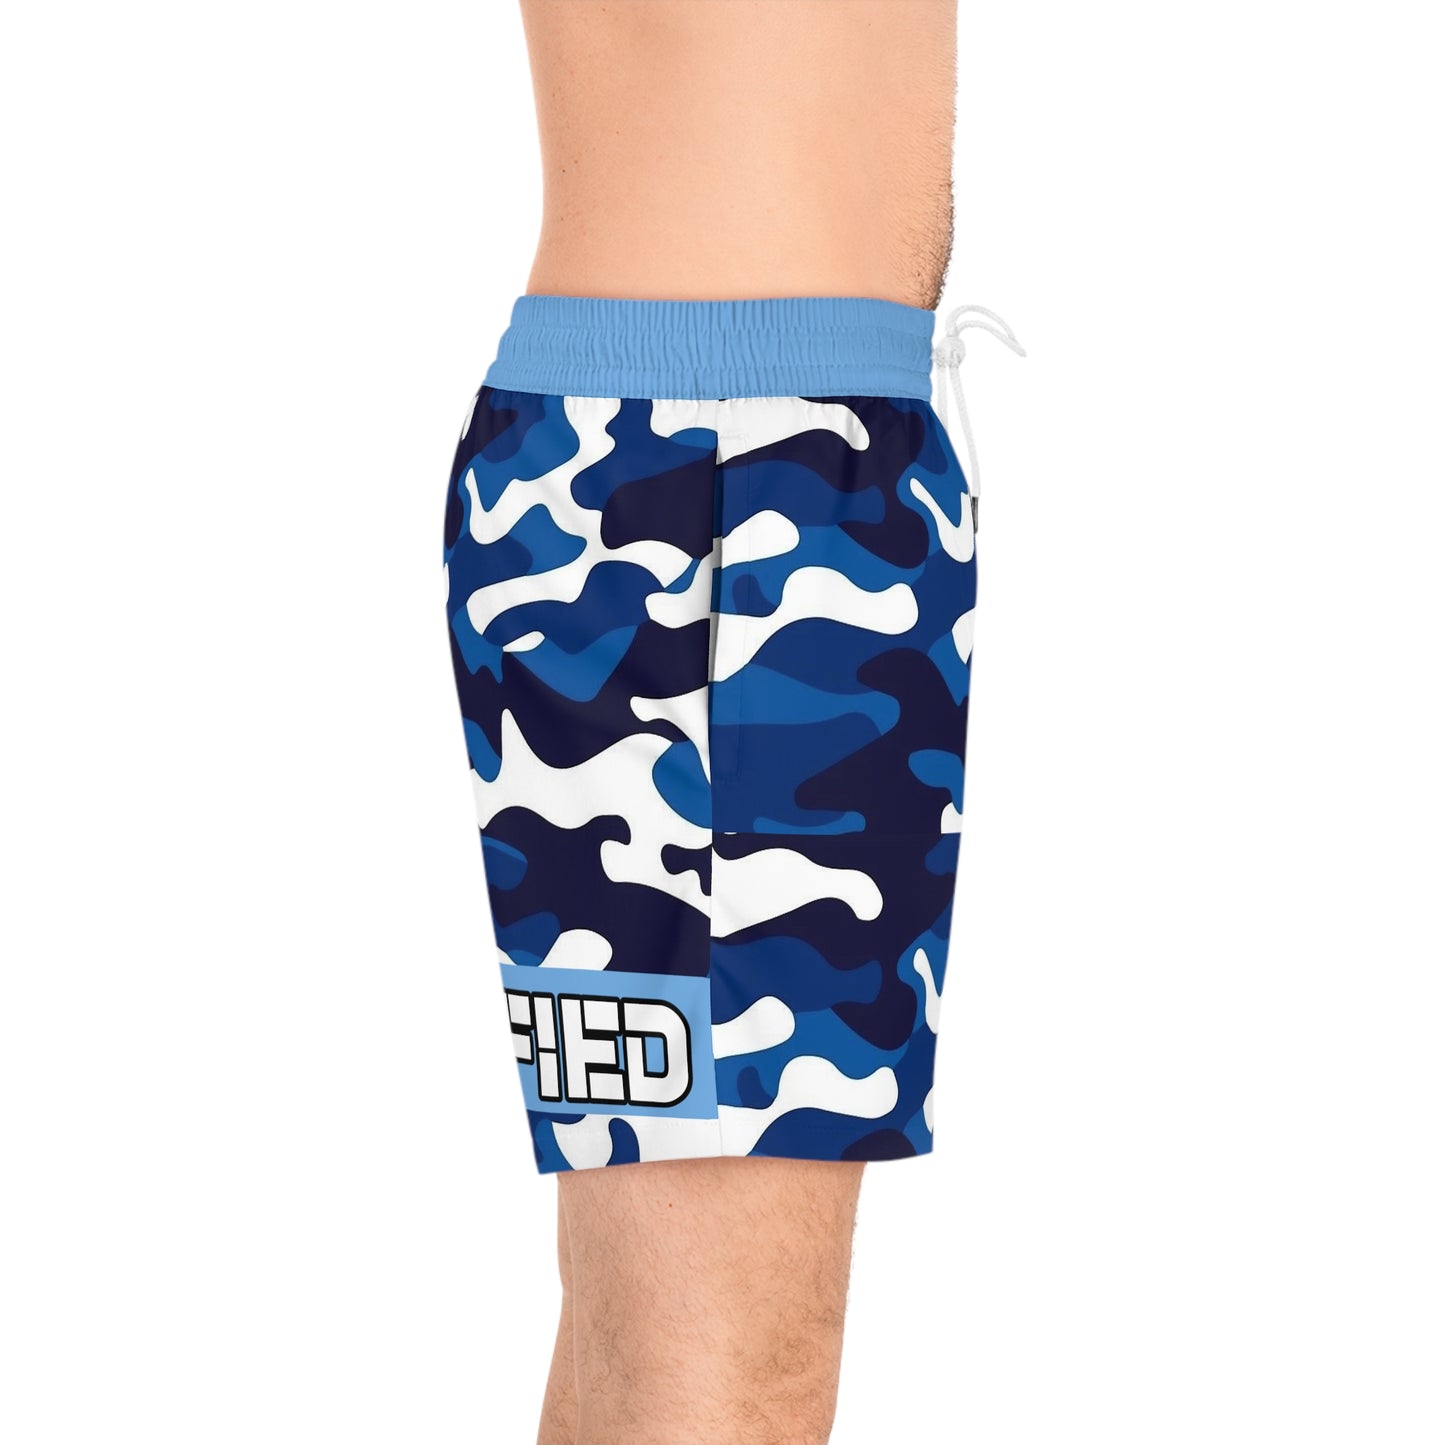 Men's DOPiFiED Navy Camo Mid-Length Swim Shorts (AOP)